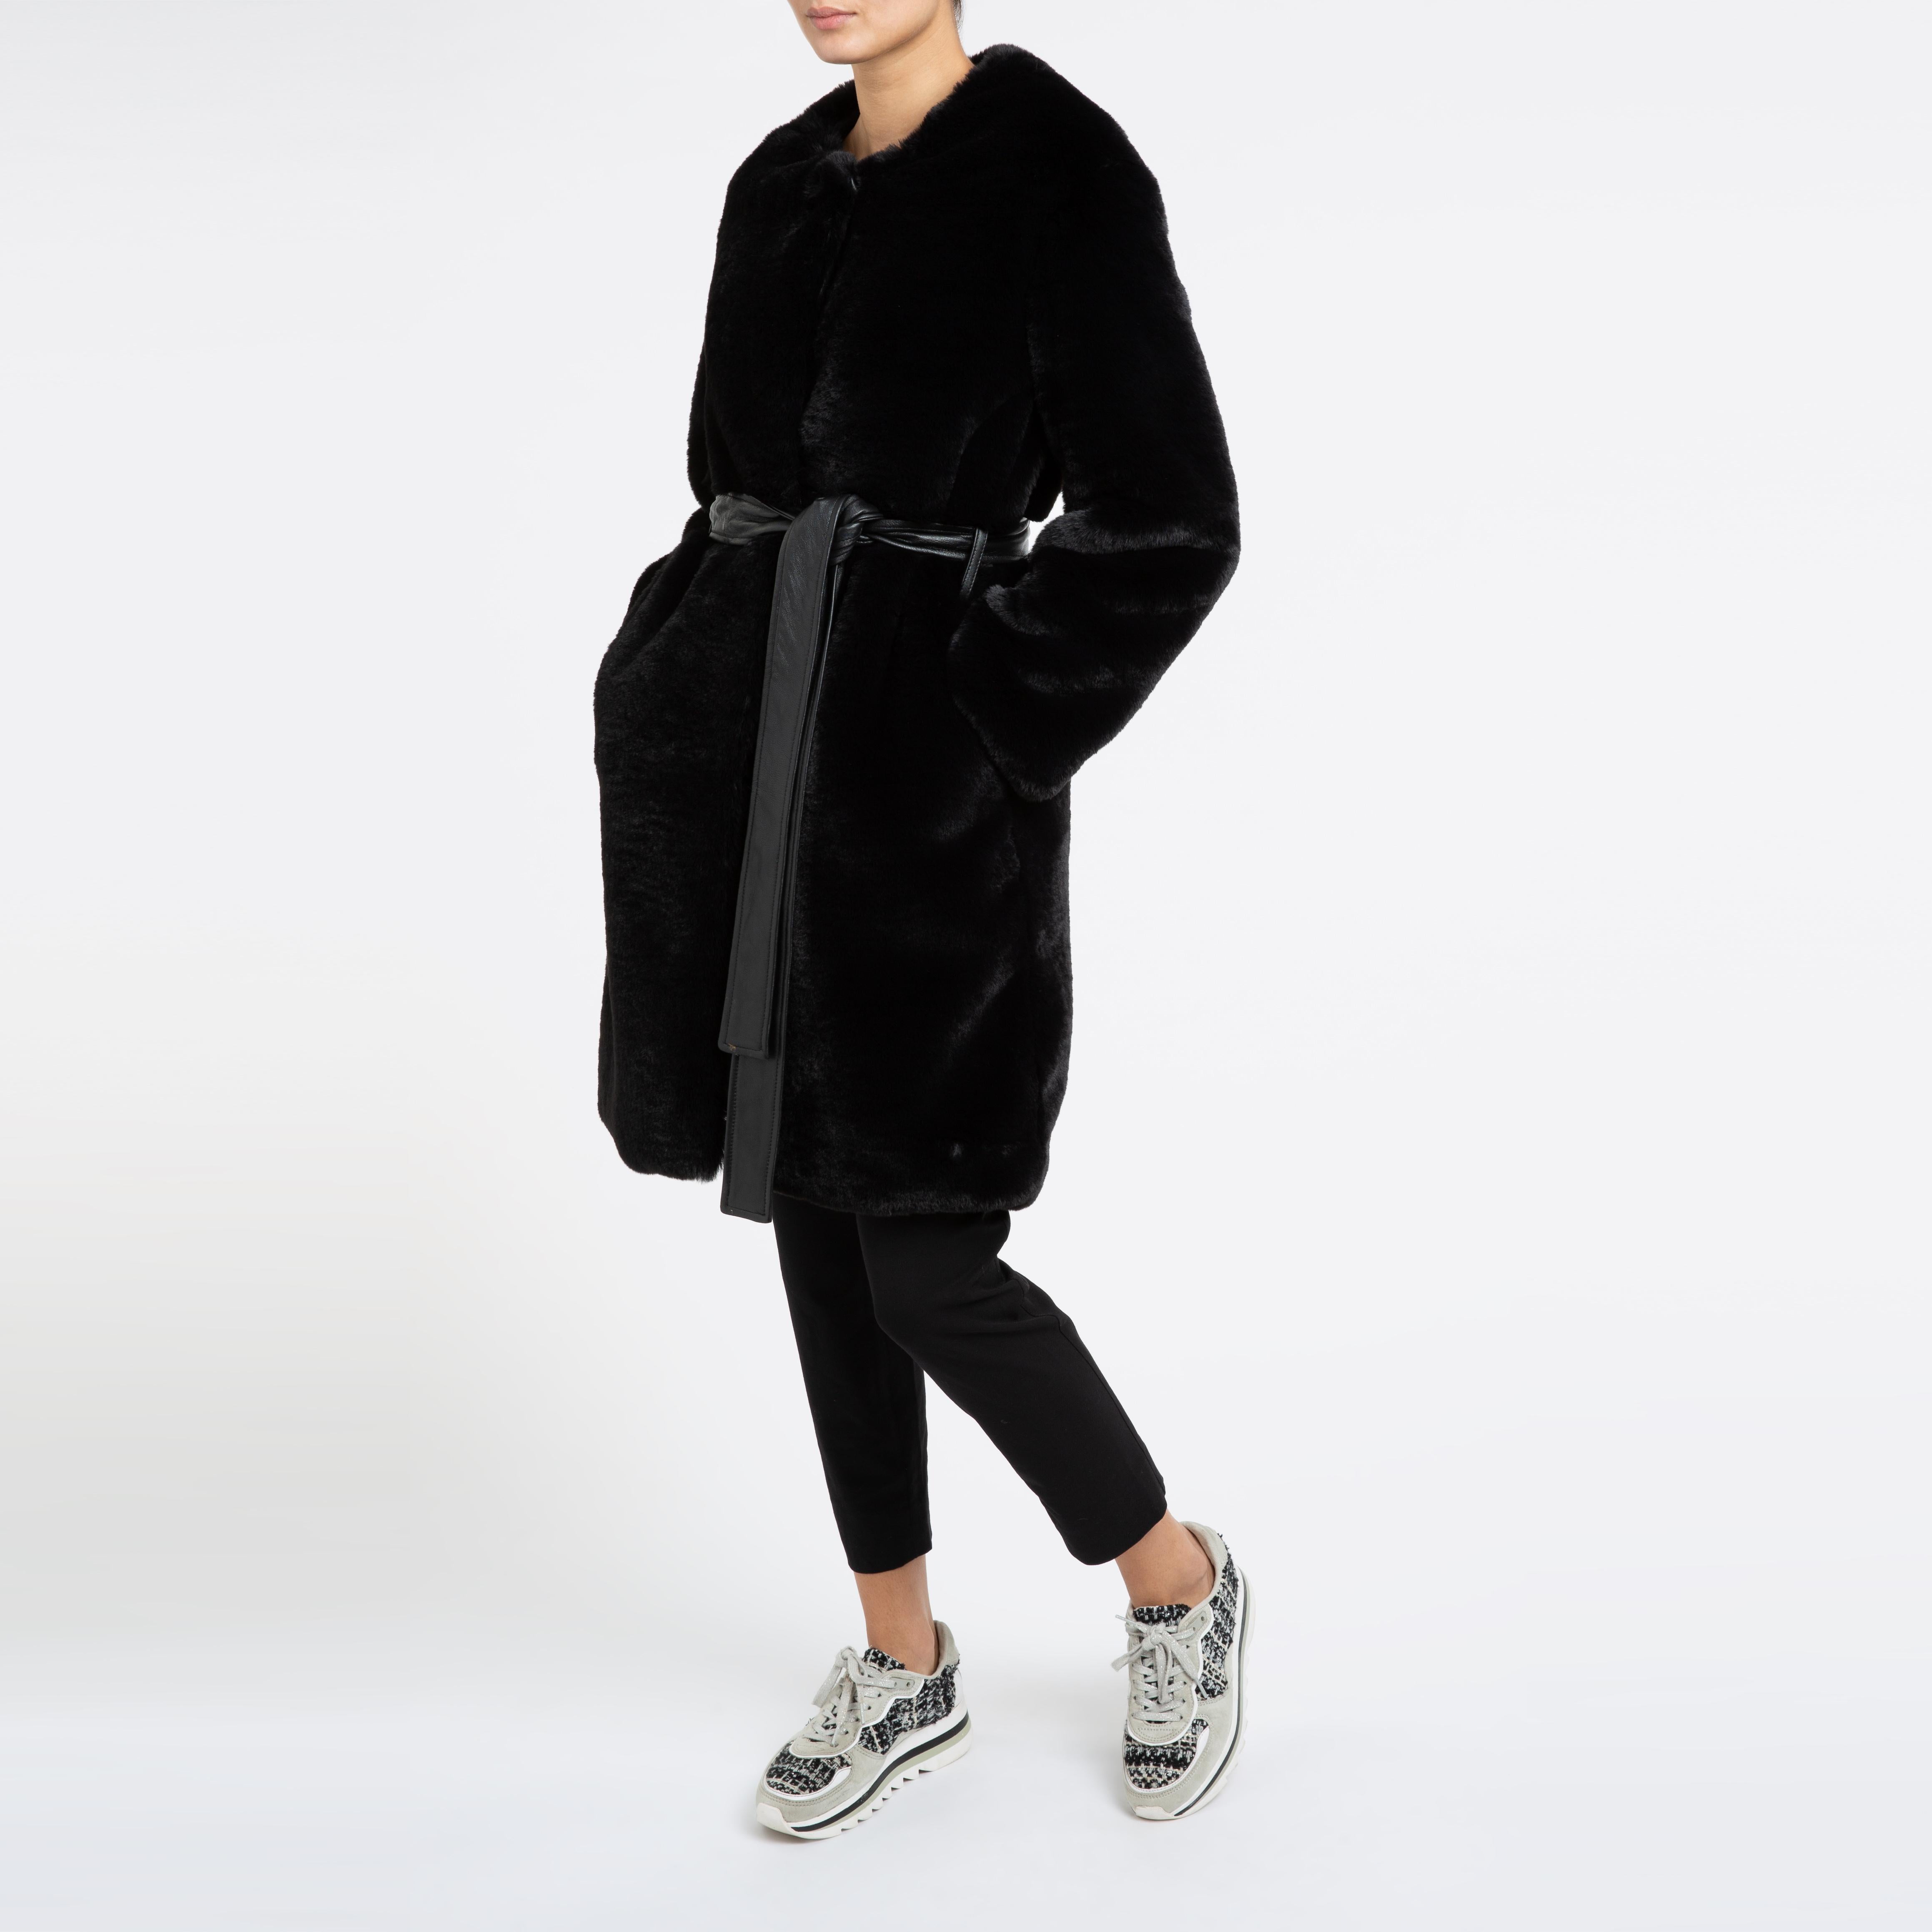 Verheyen London Serena  Collarless Faux Fur Coat in Black - Size uk 14  9